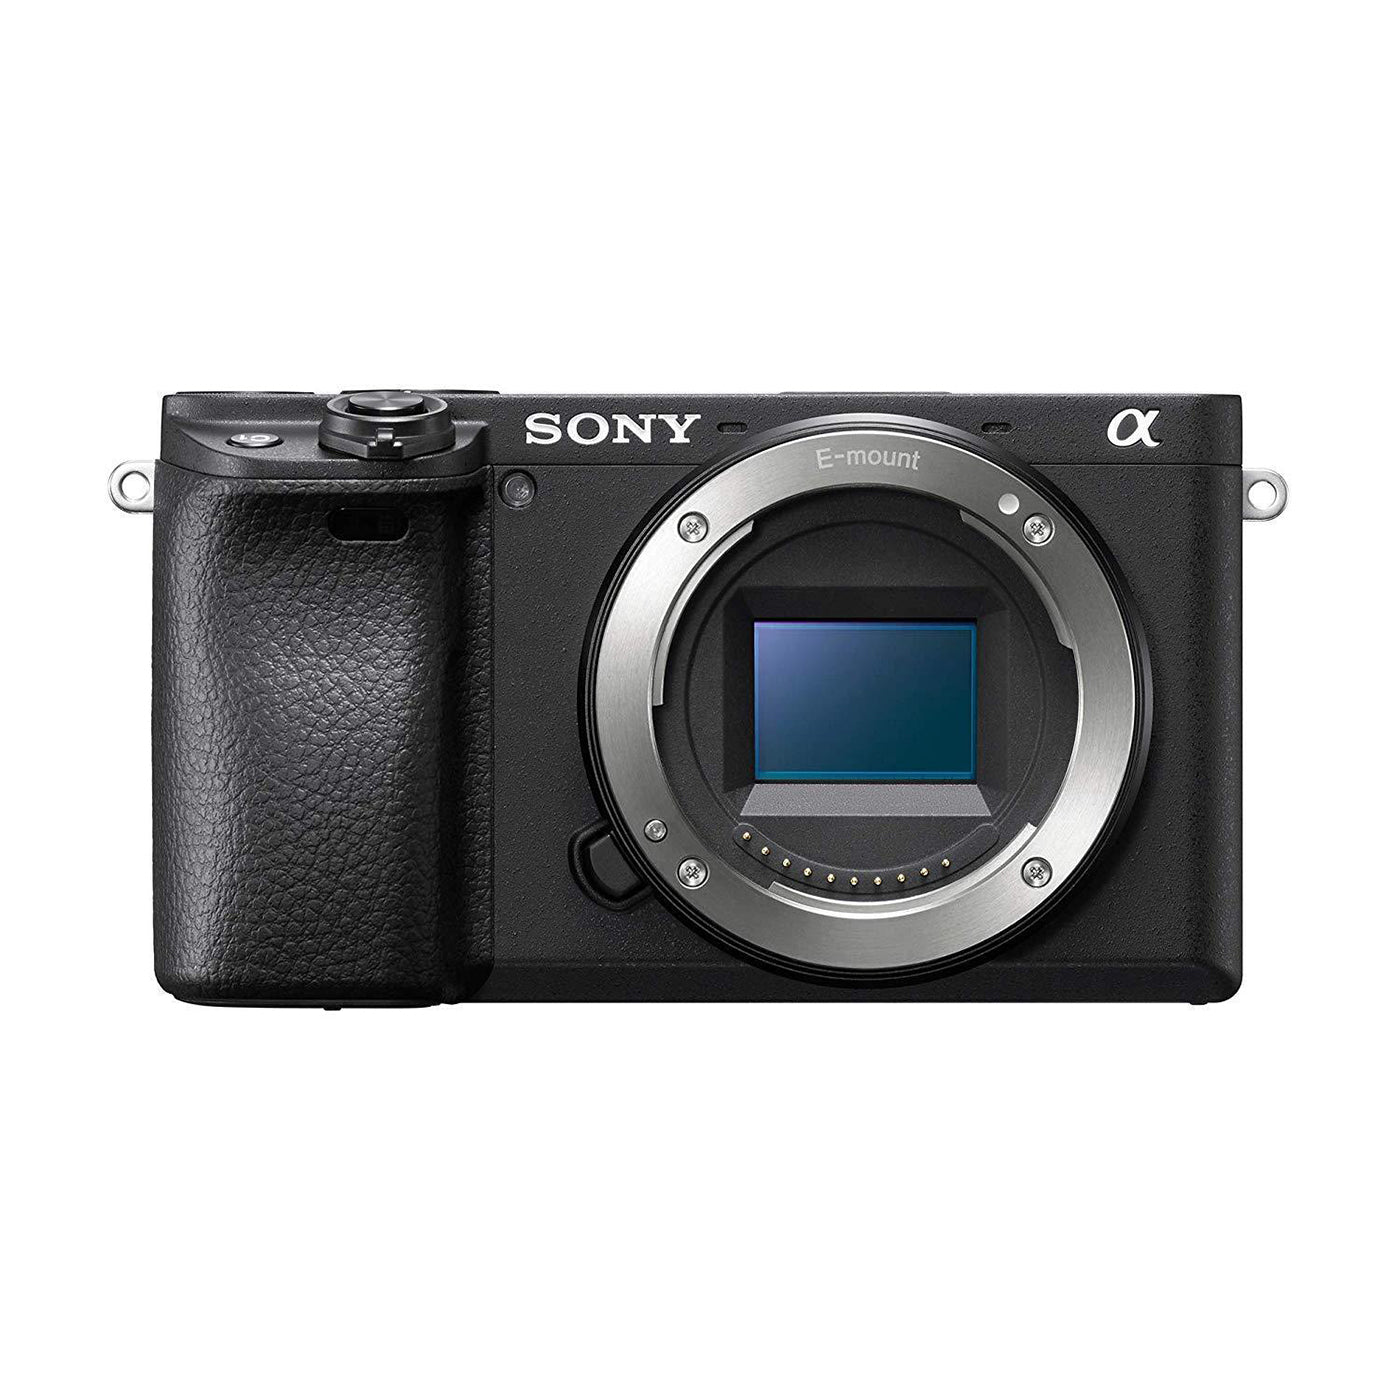 Sony Alpha 6400 E-mount camera with APS-C sensor (ILCE-6400) | 24.2 MP Mirrorless Camera, 11 FPS, 4K/30p